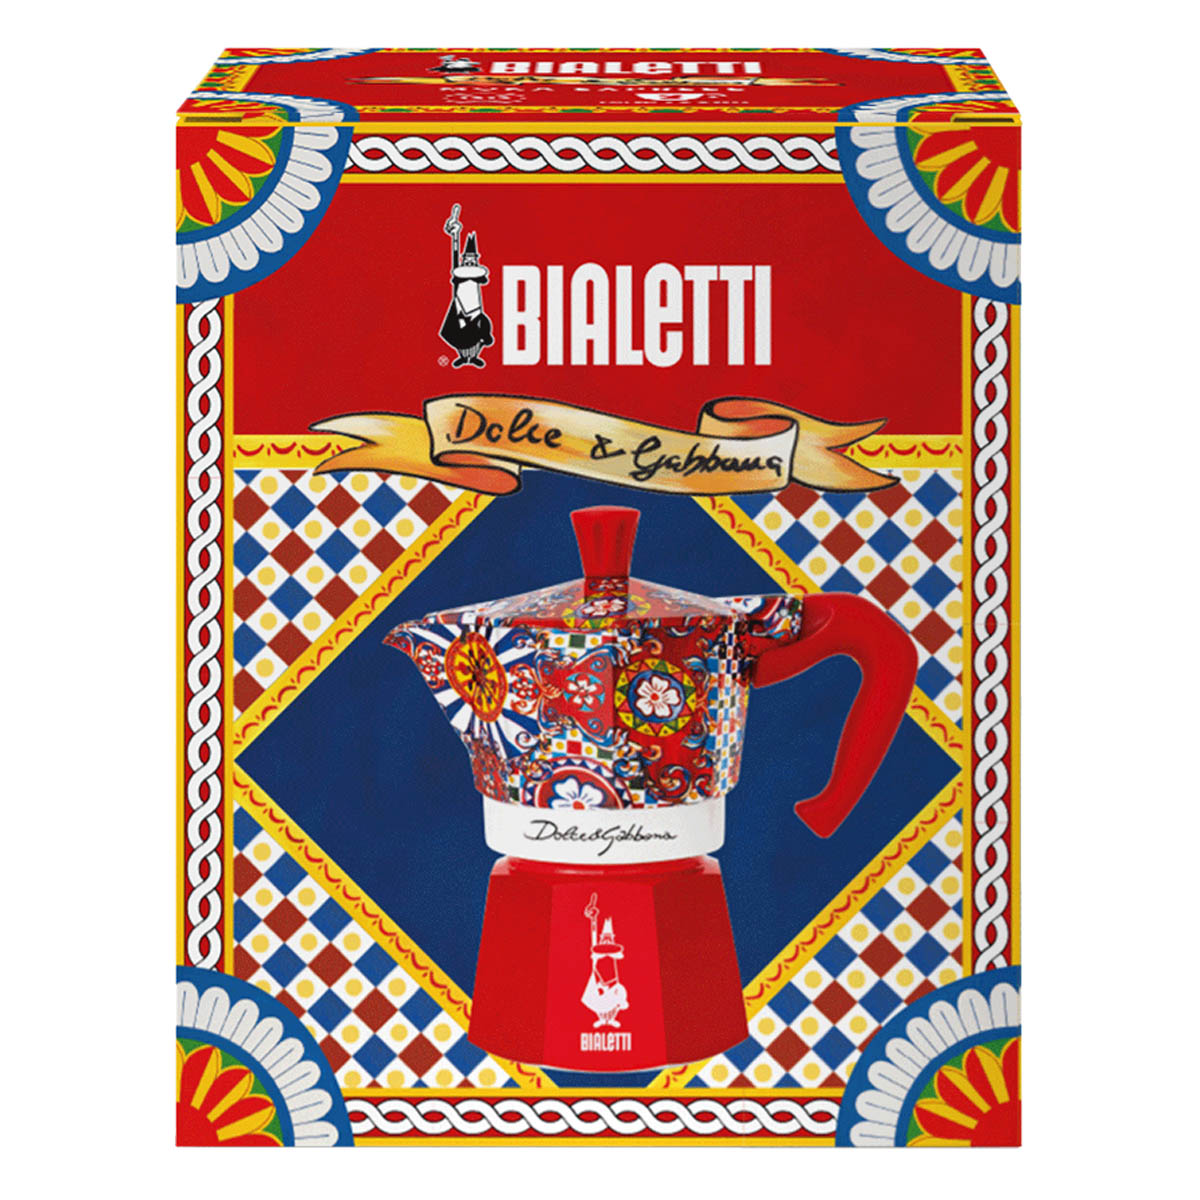 Гейзерная кофеварка Bialetti Dolce&Gabbana на 3 порции Bialetti 5221_6005, цвет красный - фото 4